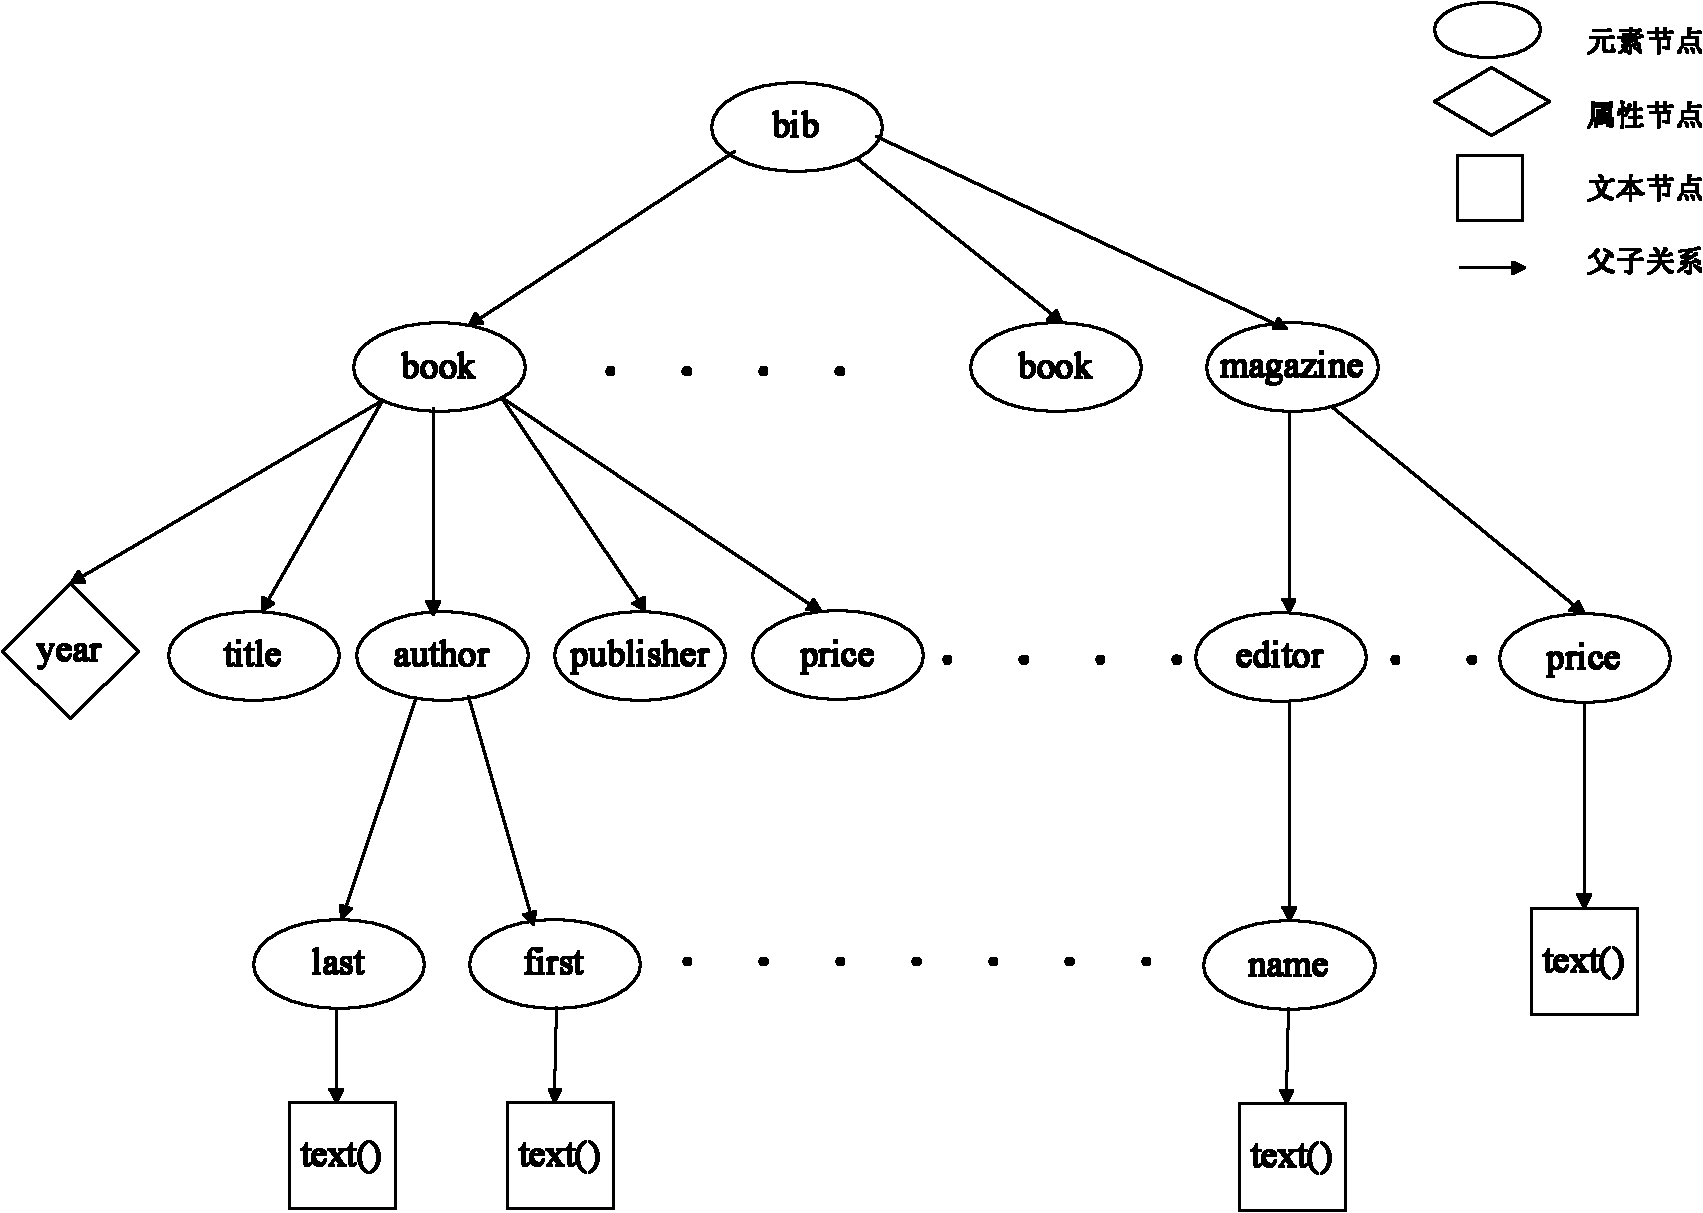 Path information based extensible markup language (XML) ancestor-descendant indexing method